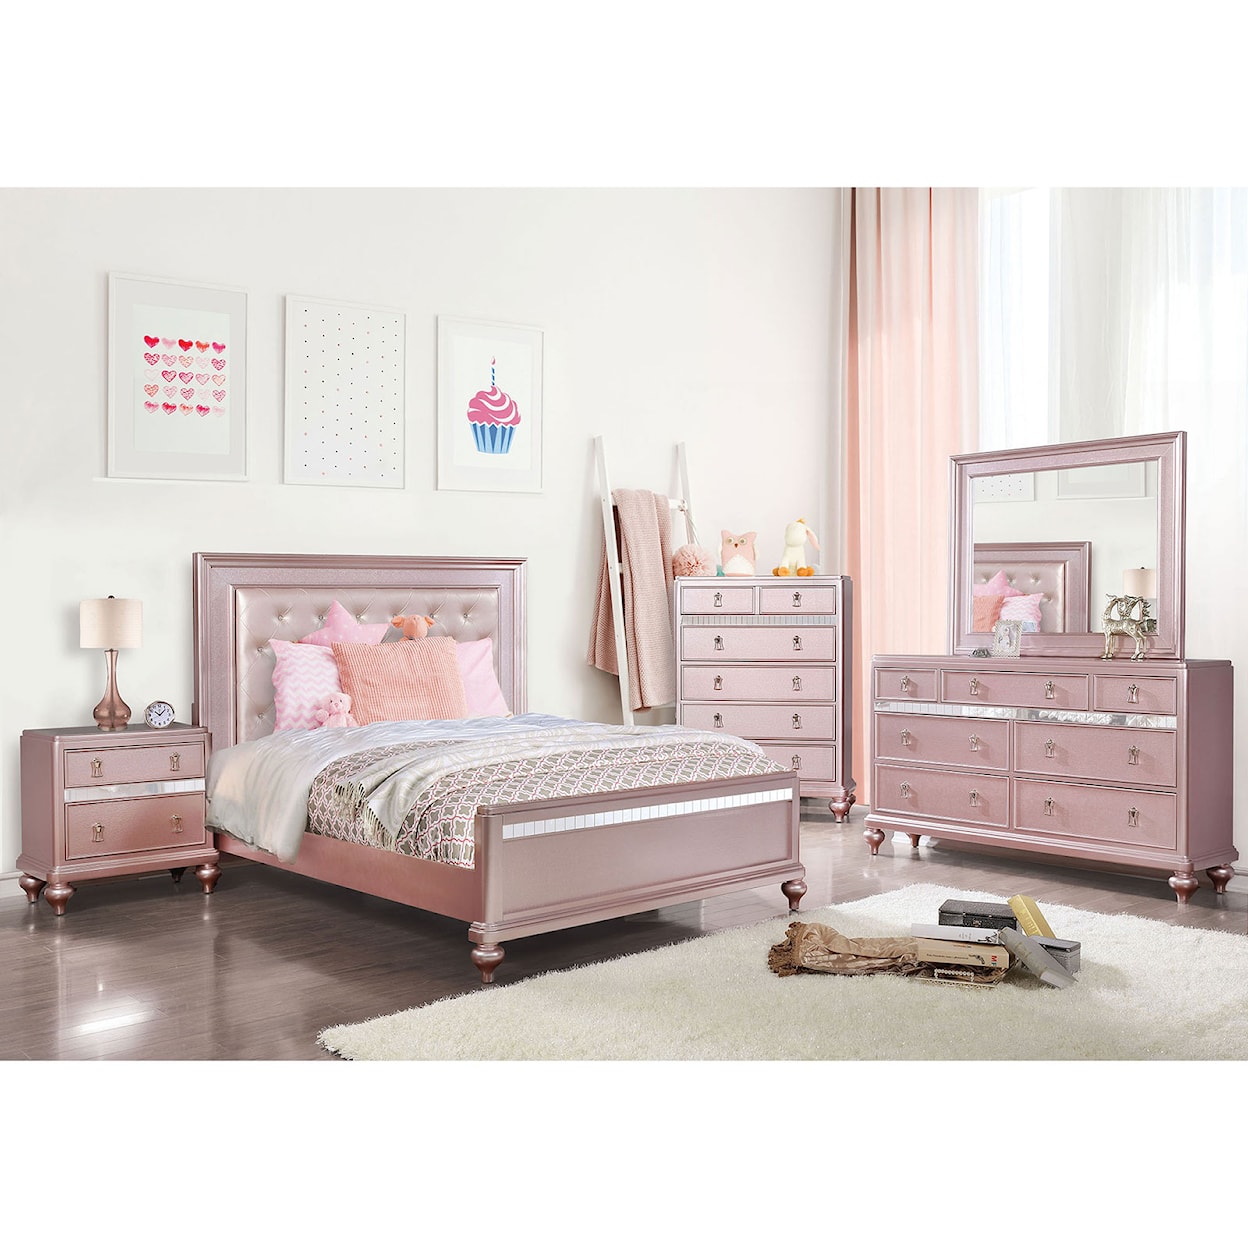 Furniture of America Ariston Twin Bedroom Set